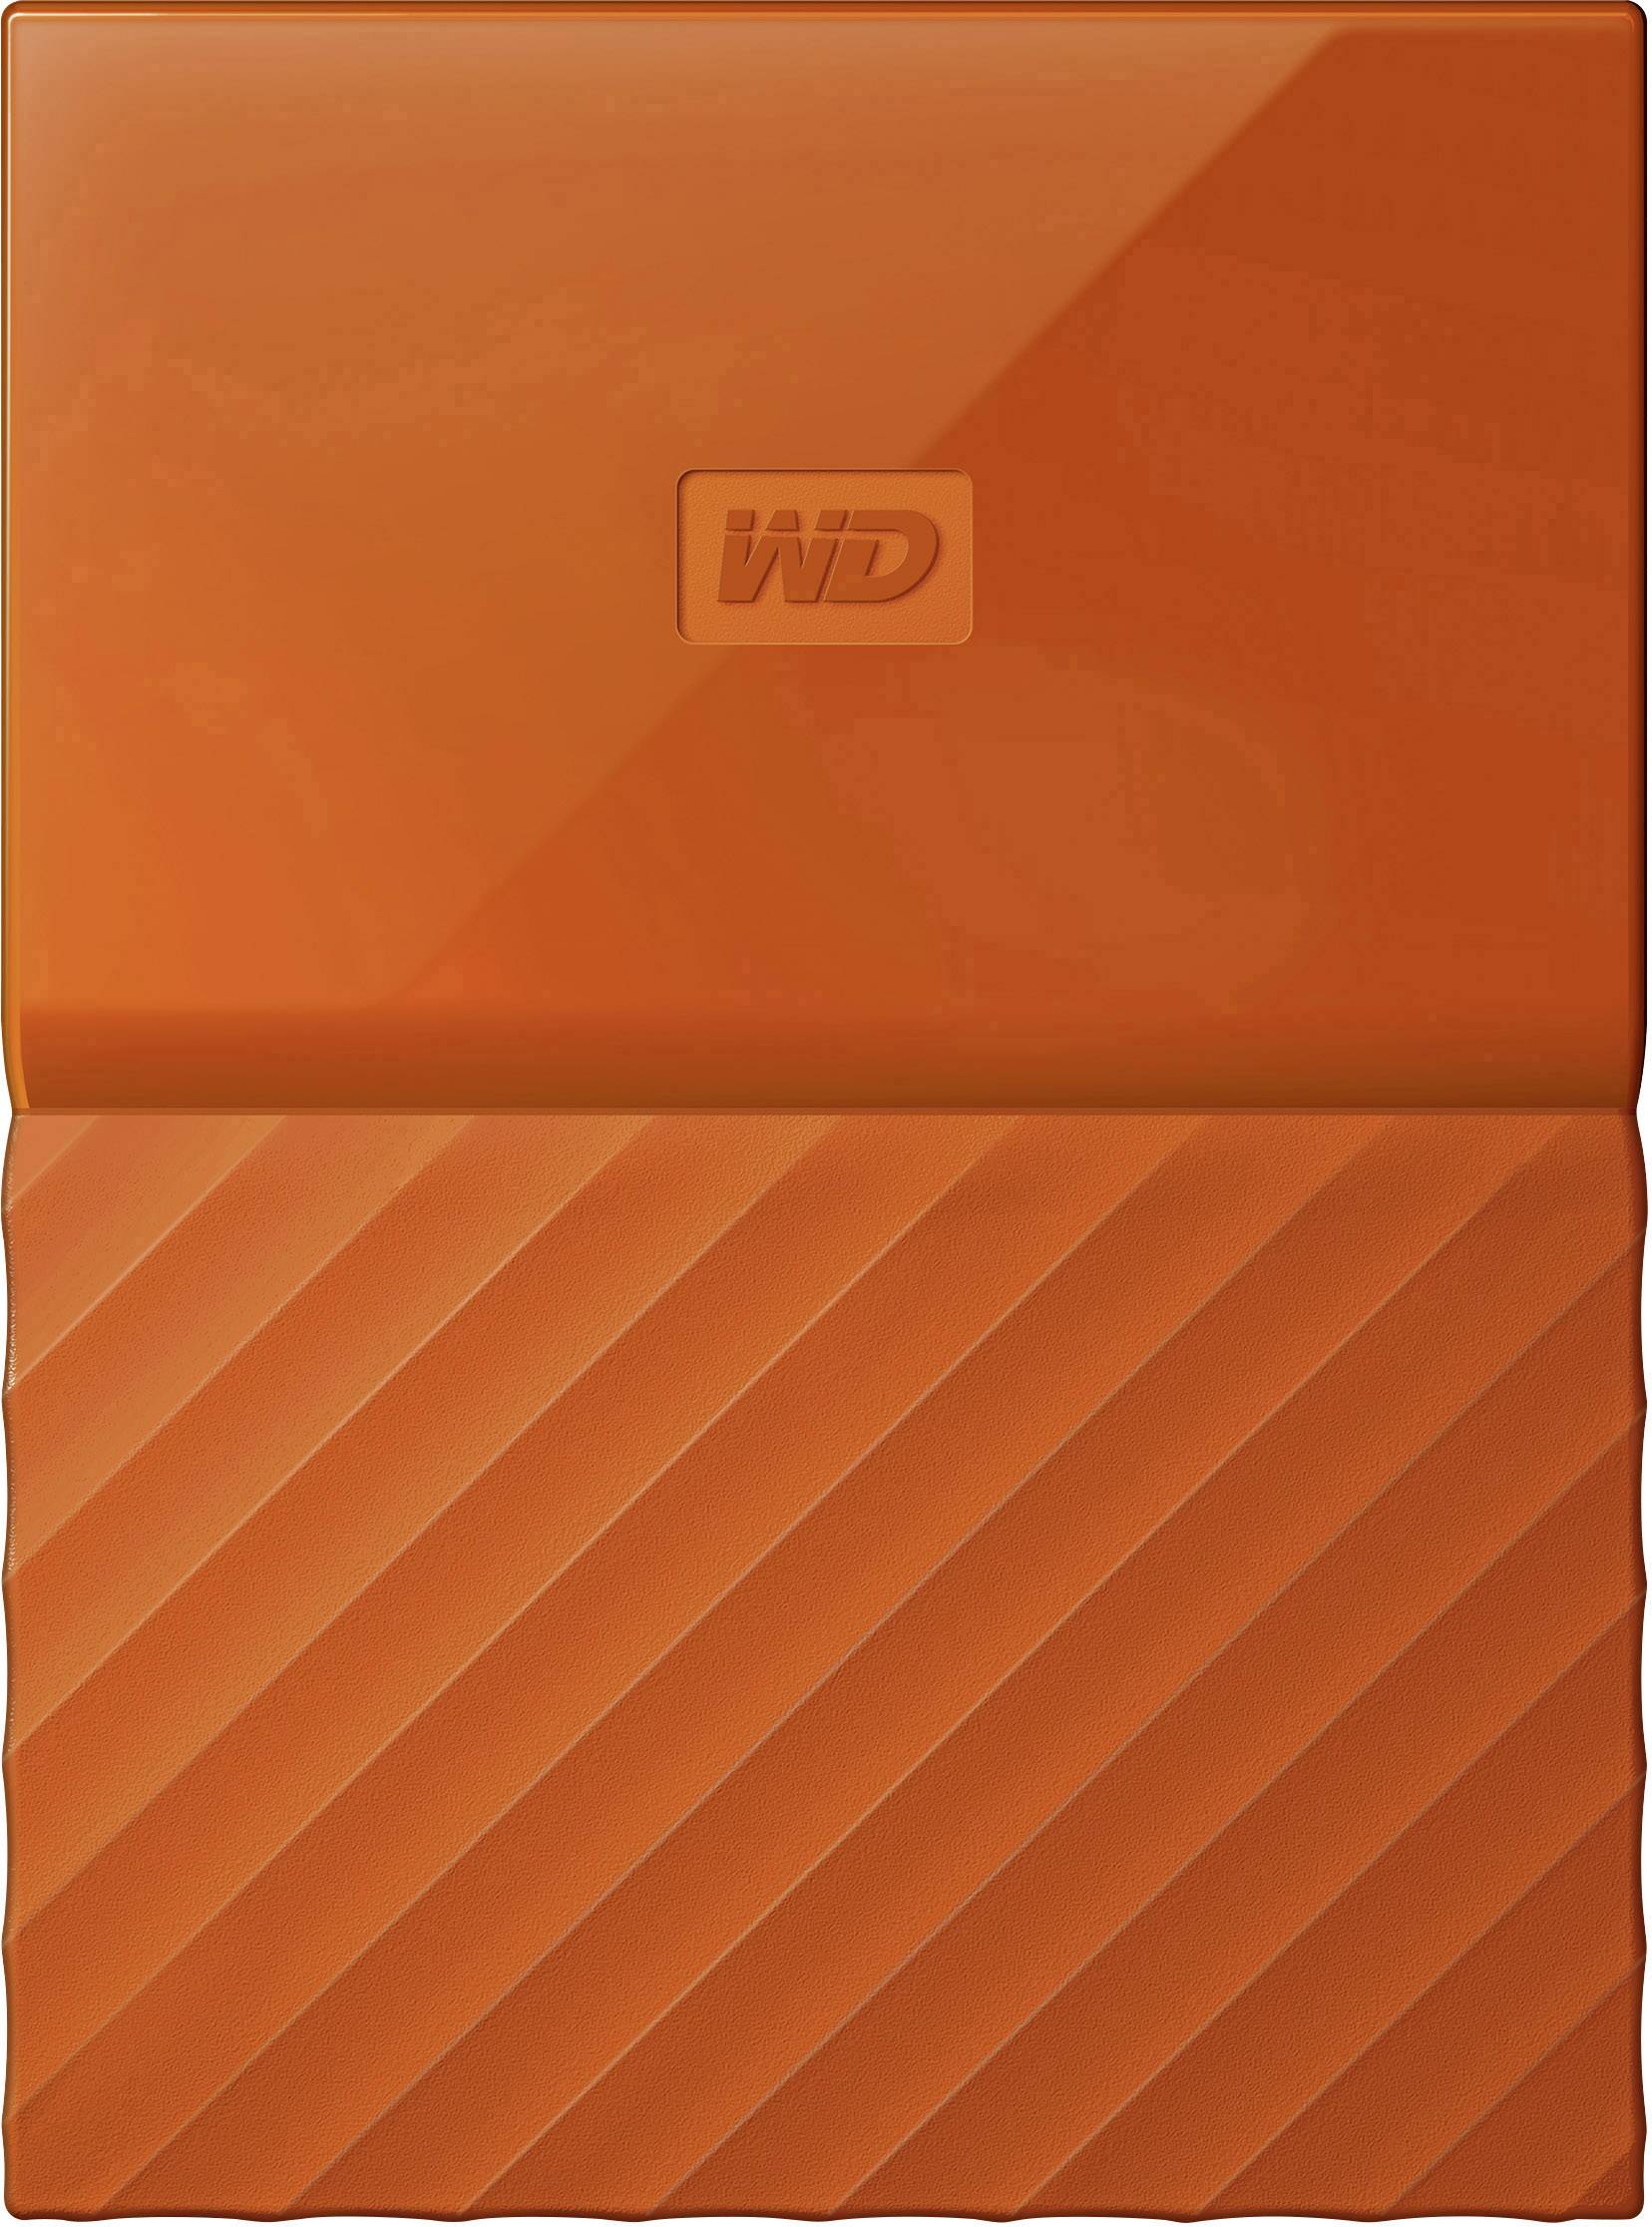 WD 1TB Orange My Passport Portable External Hard Drive WDBYNN0010BOR-WESN USB 3.0 